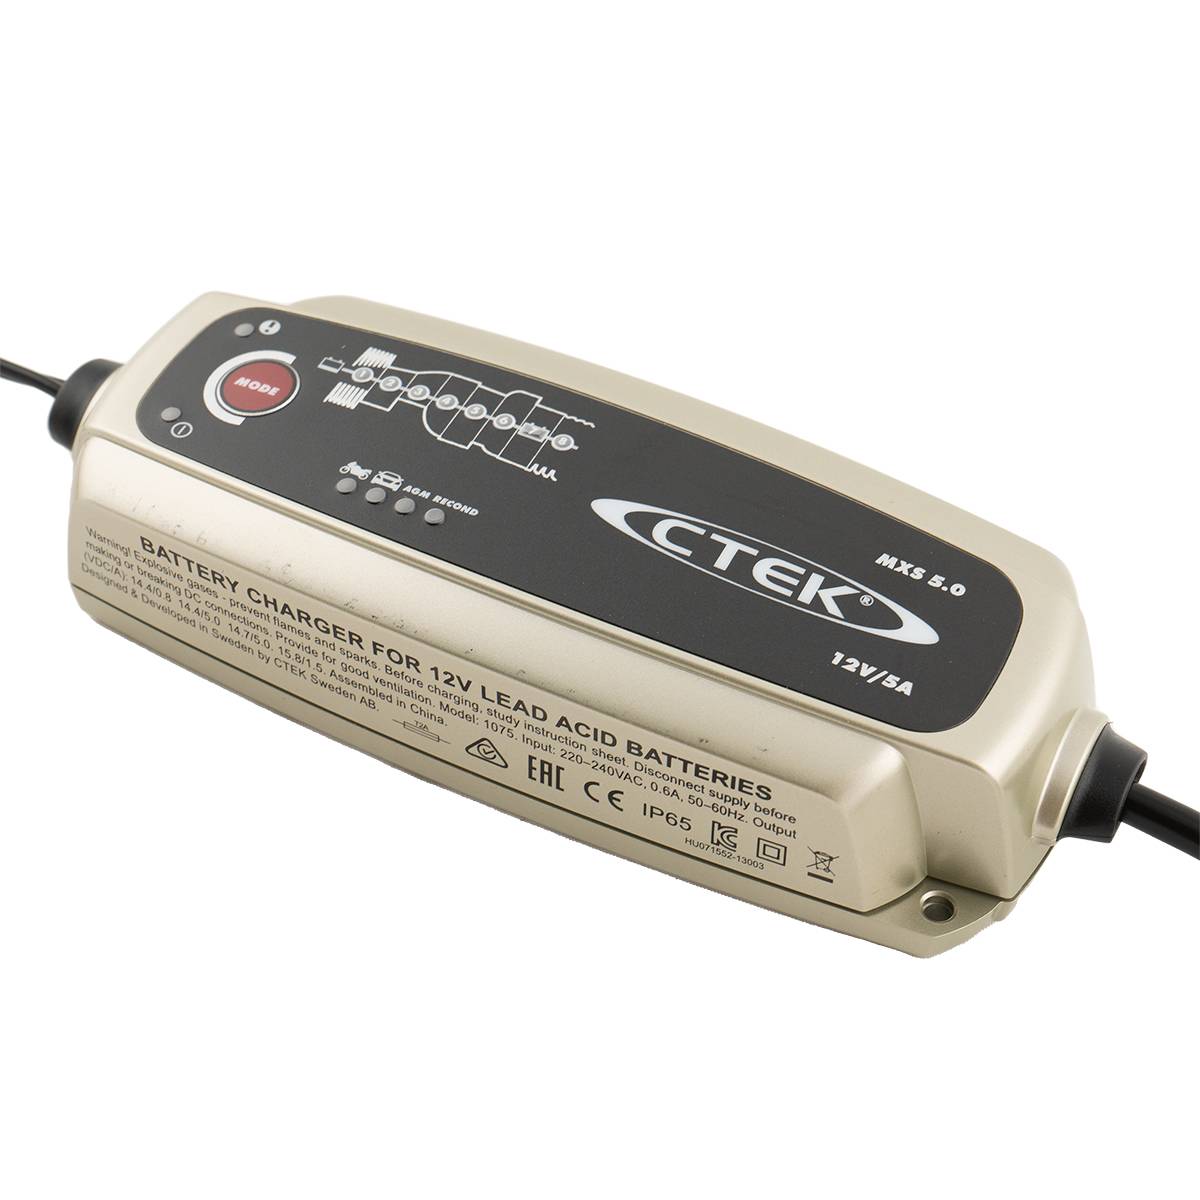 CTEK MXS 5.0 Autobatterie-Ladegerät 12V 5A